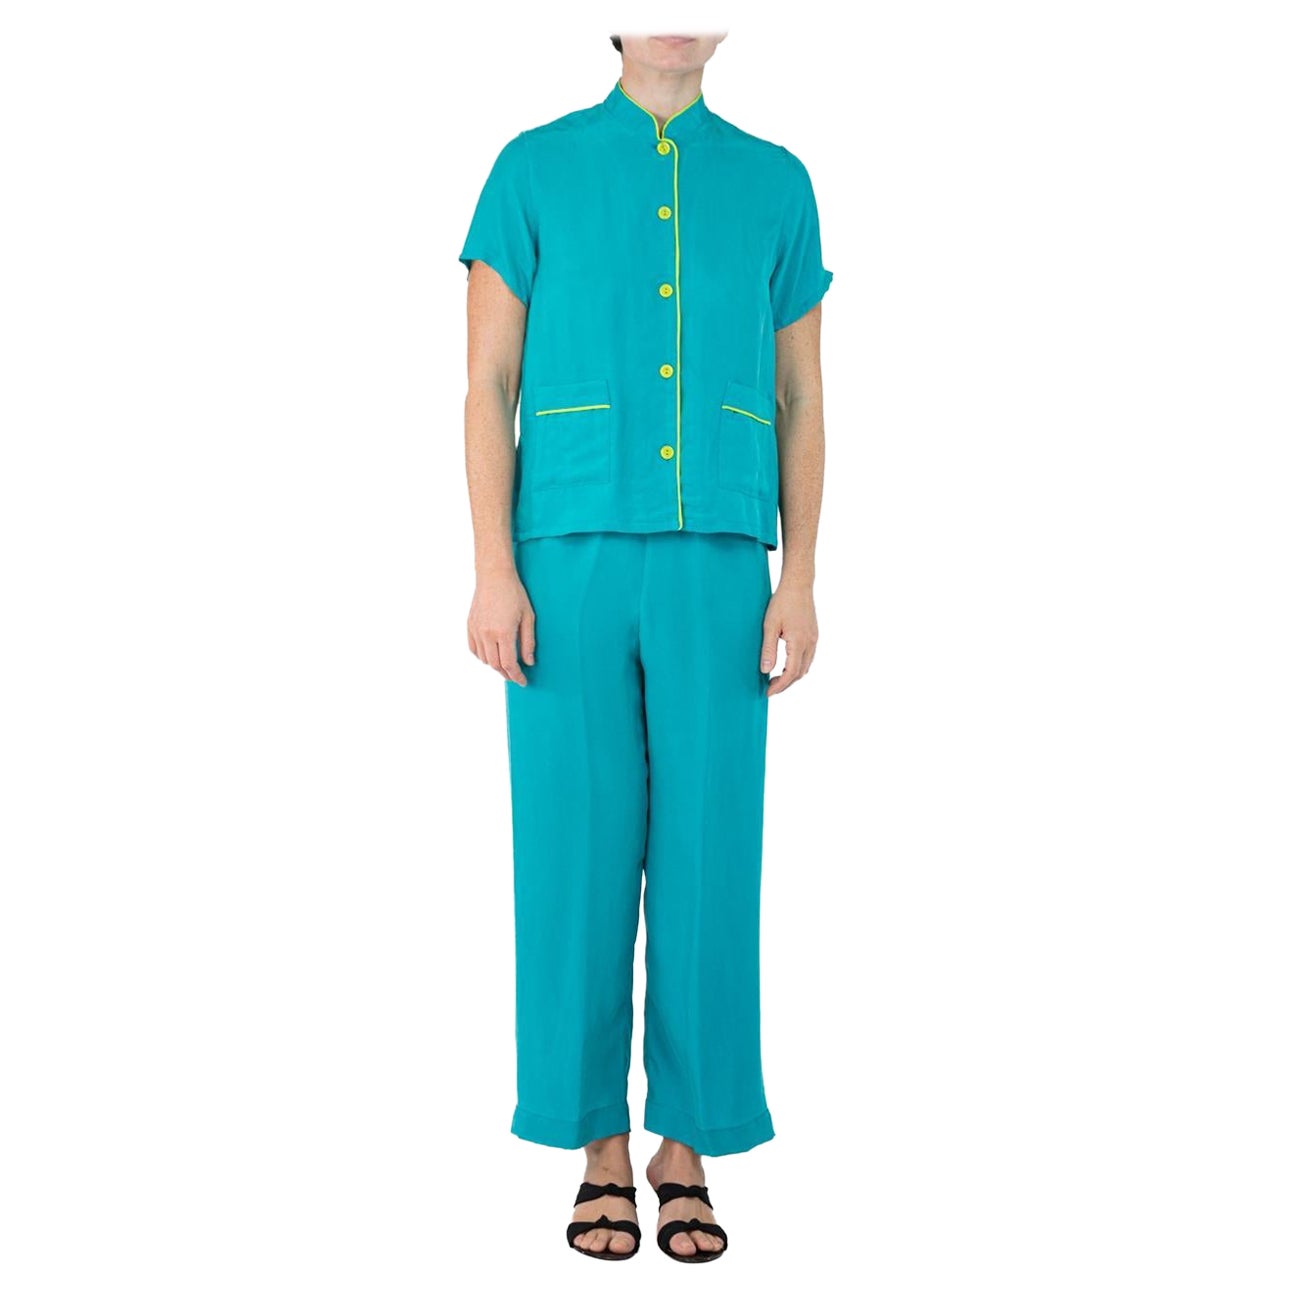 Morphew Collection Teal & Neon Yellow Trim Cold Rayon Bias Pajamas Master Medium For Sale